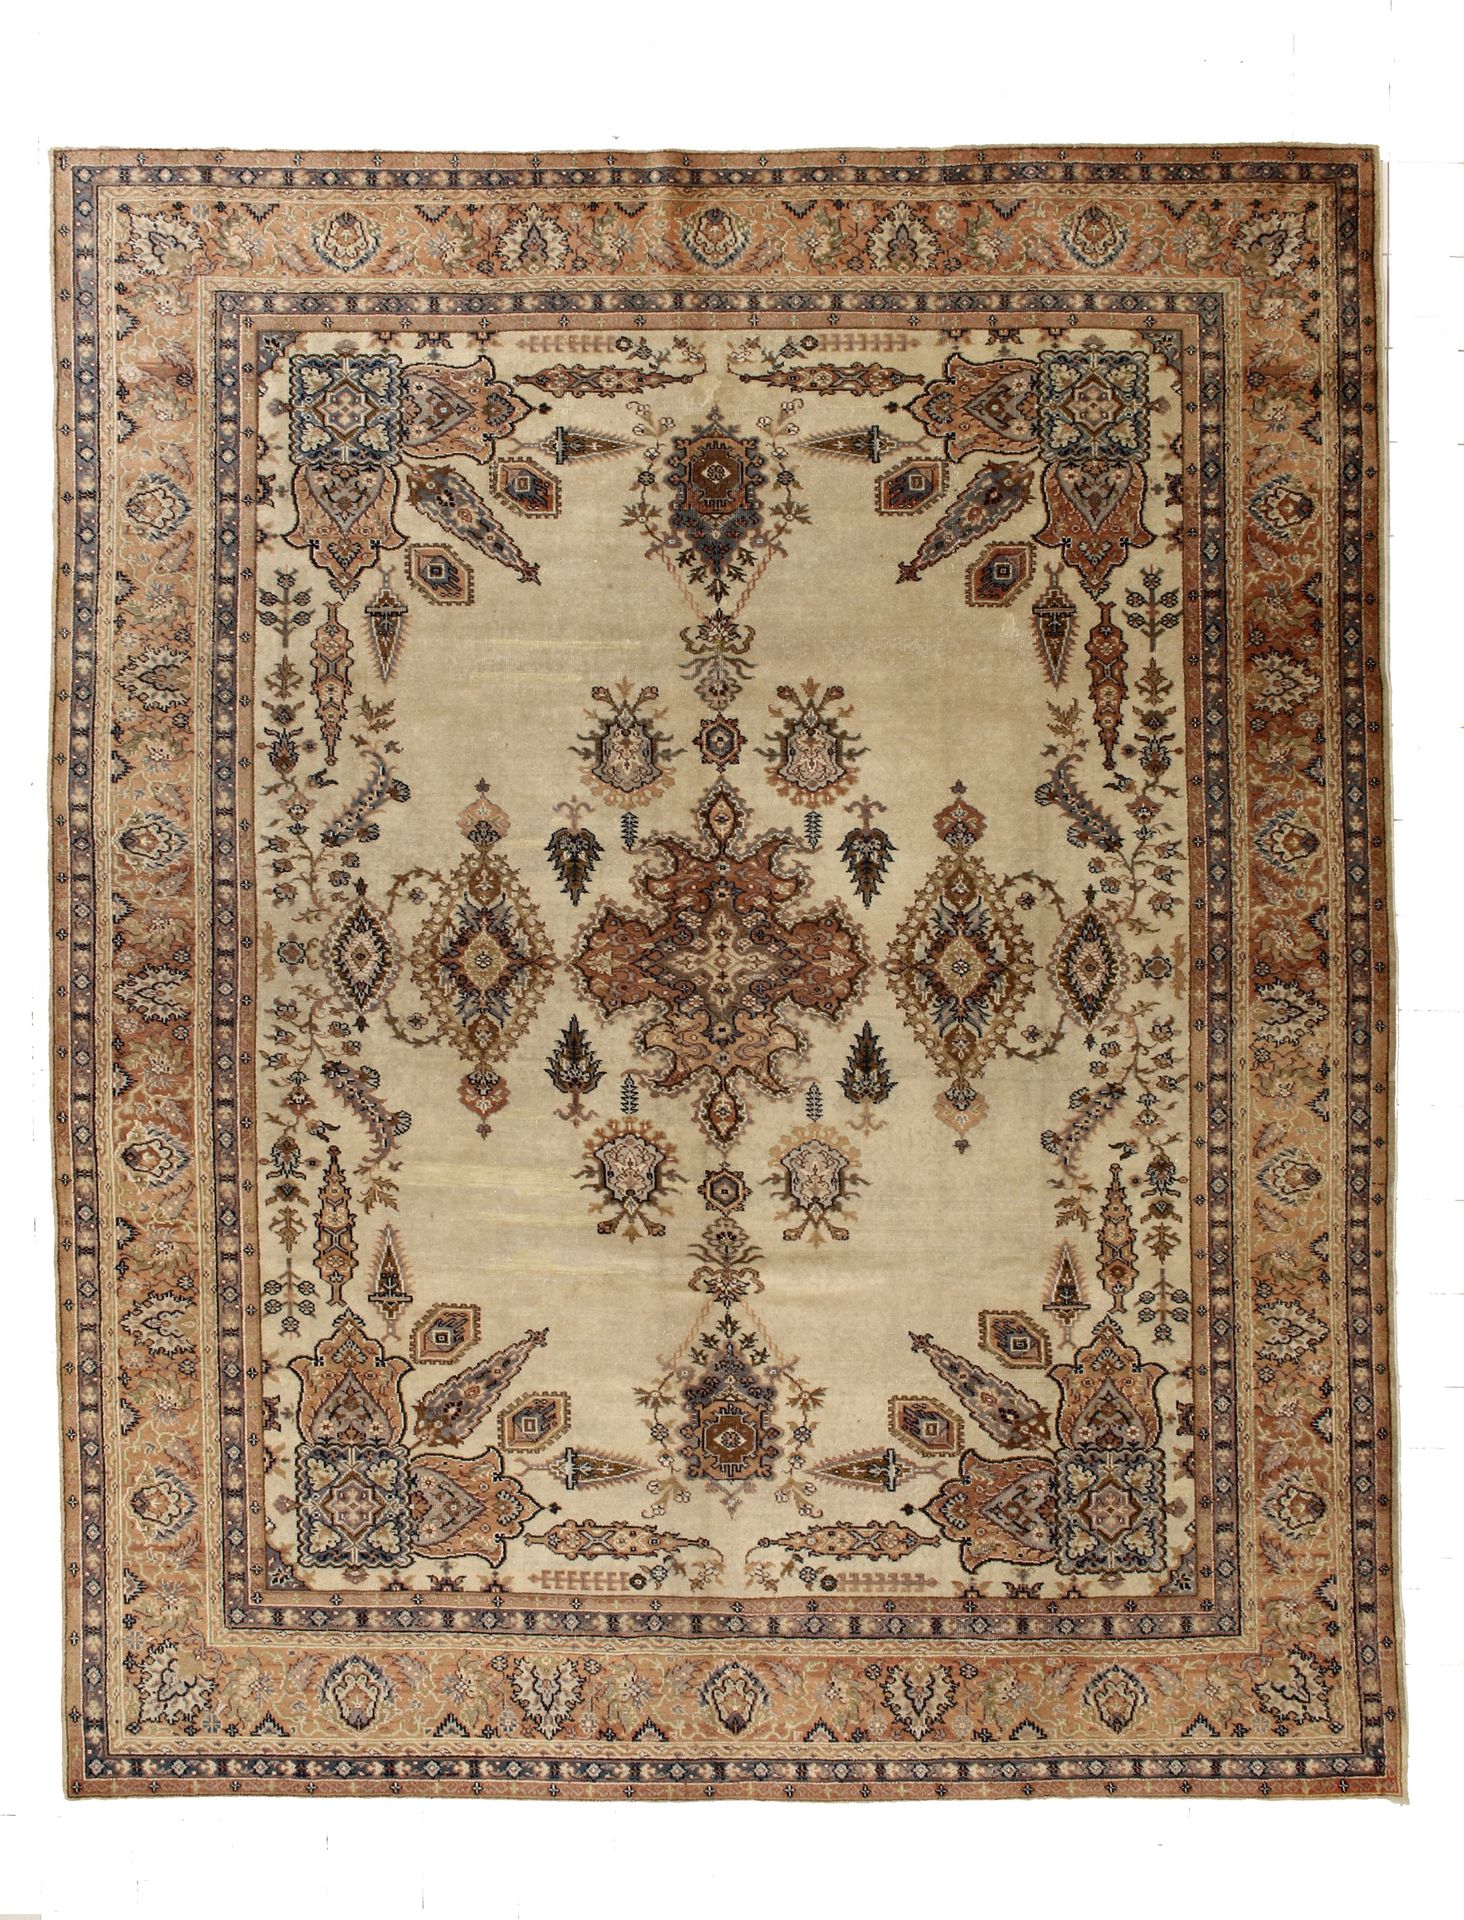 Bor carpet Bor carpet. Anatolia. Early 20th century. Very good state of preserva&hellip;